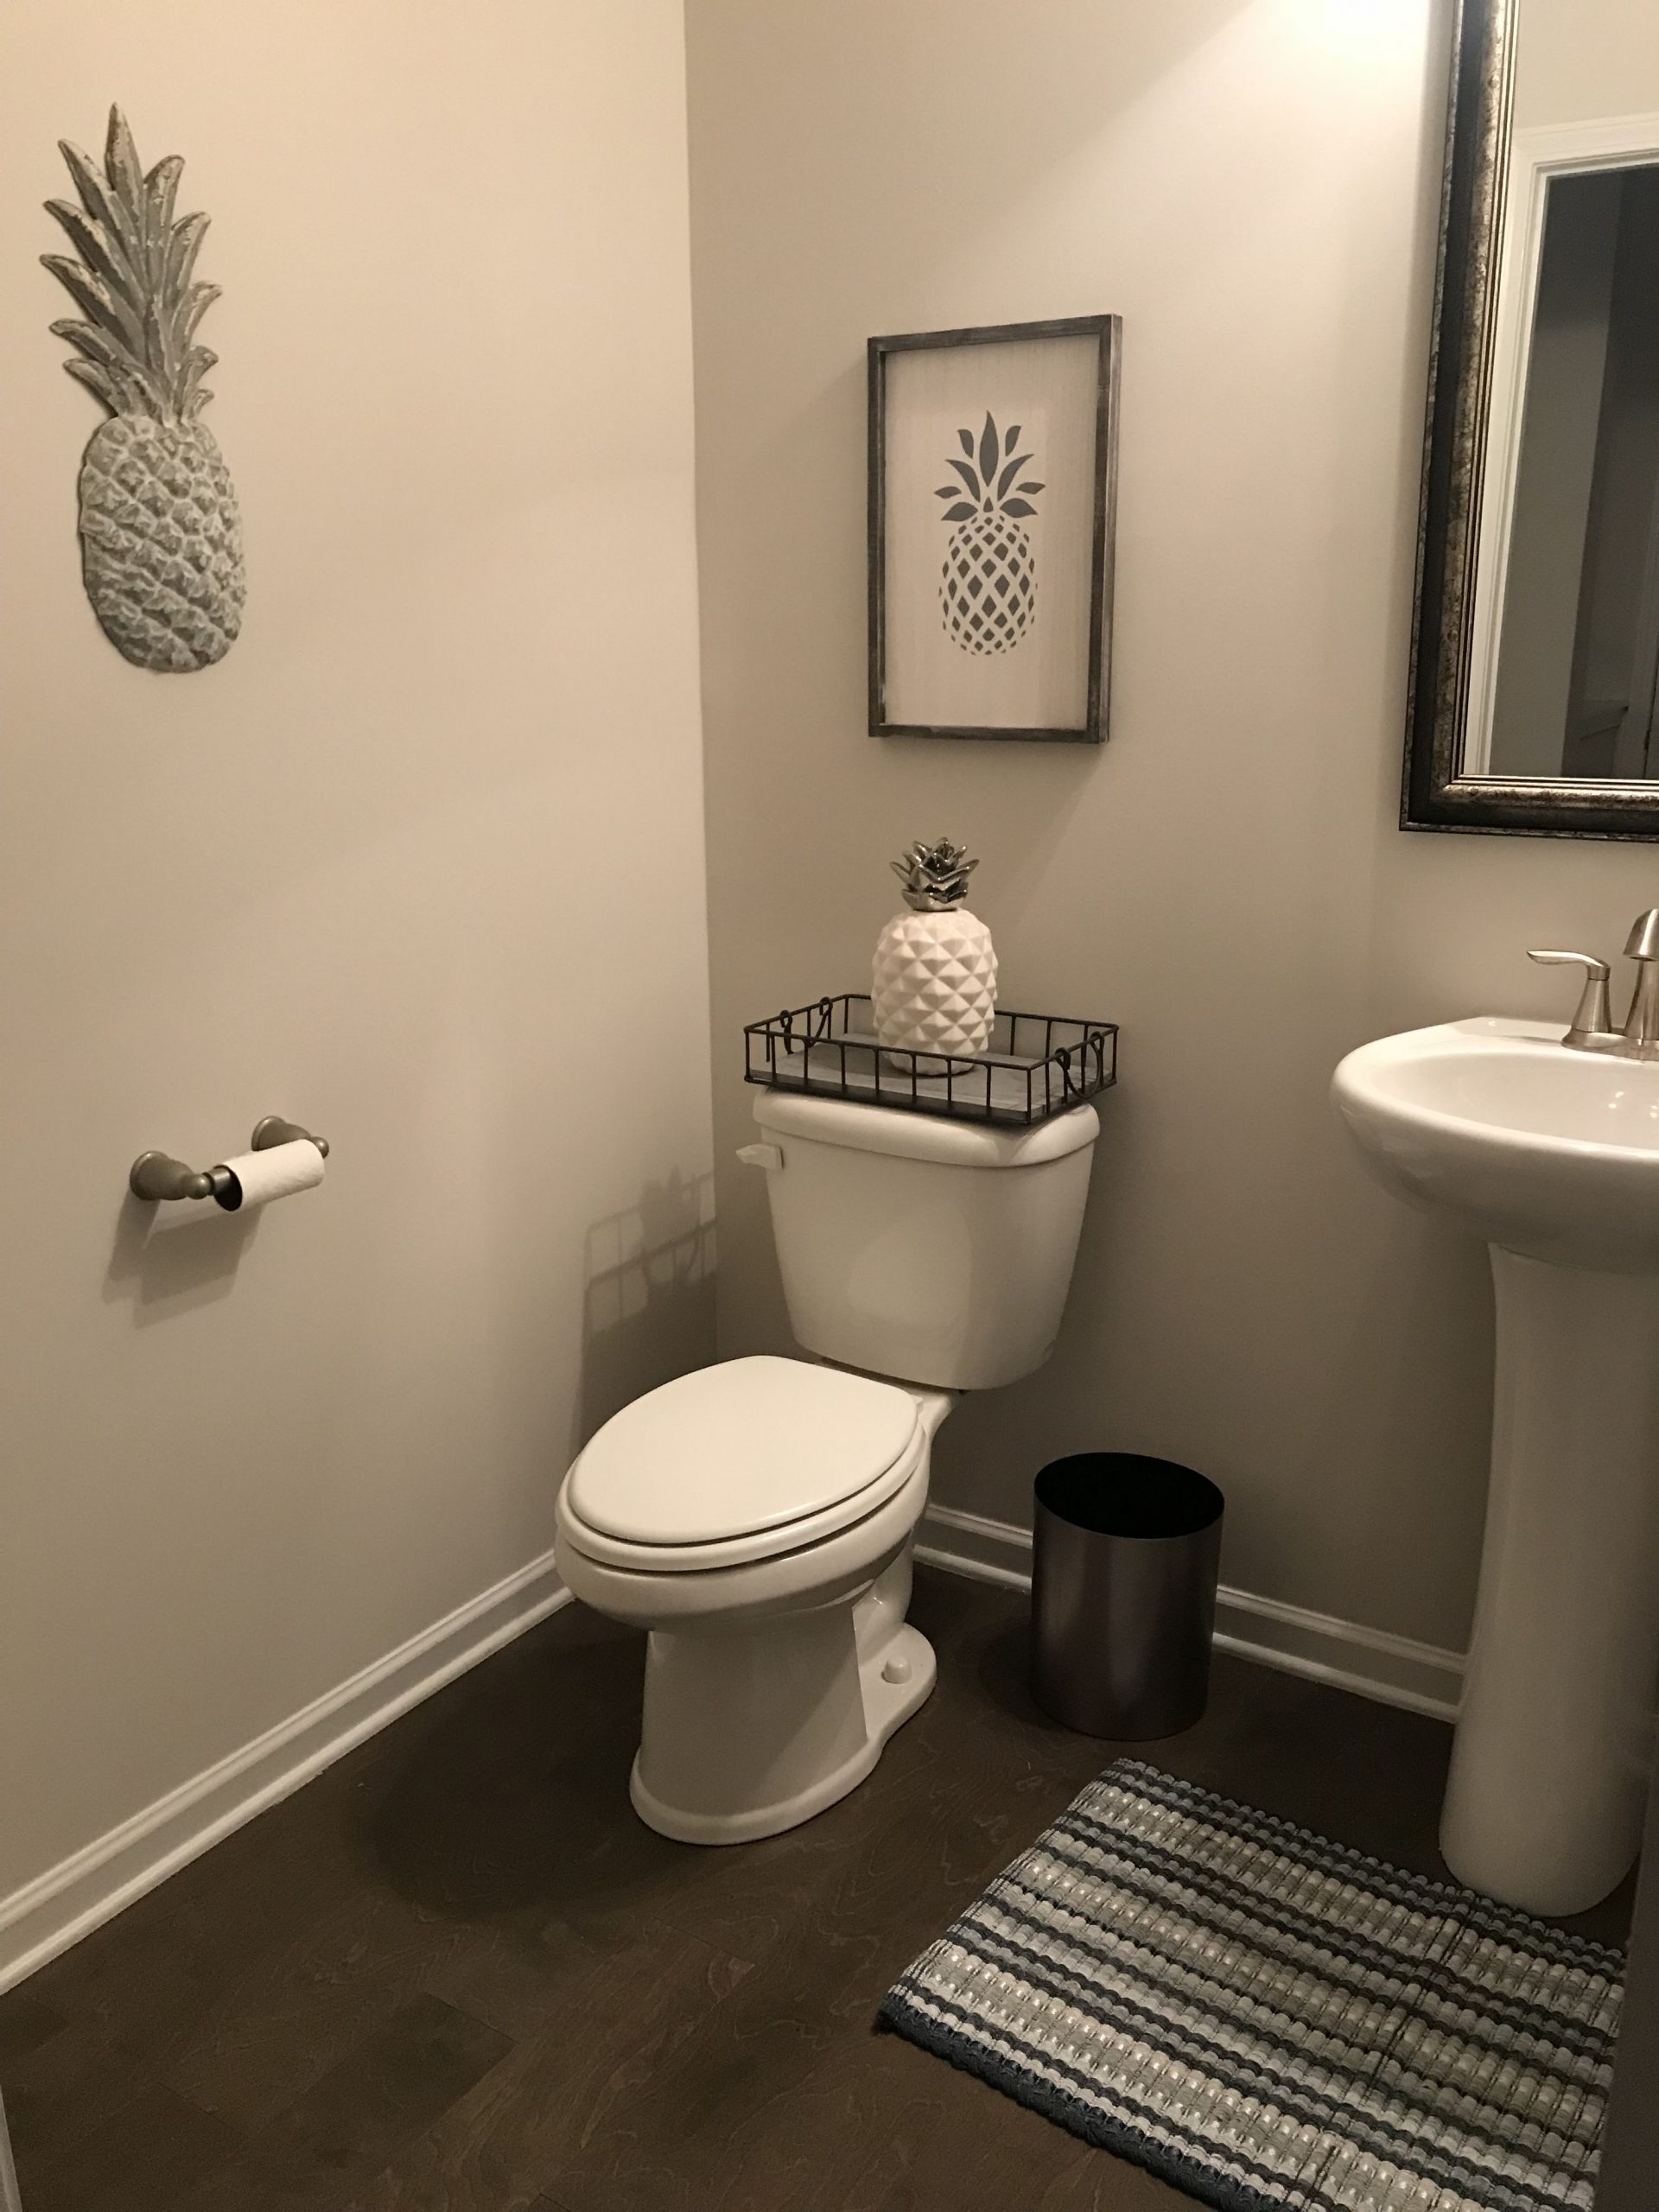 Pineapple Bathroom Decor